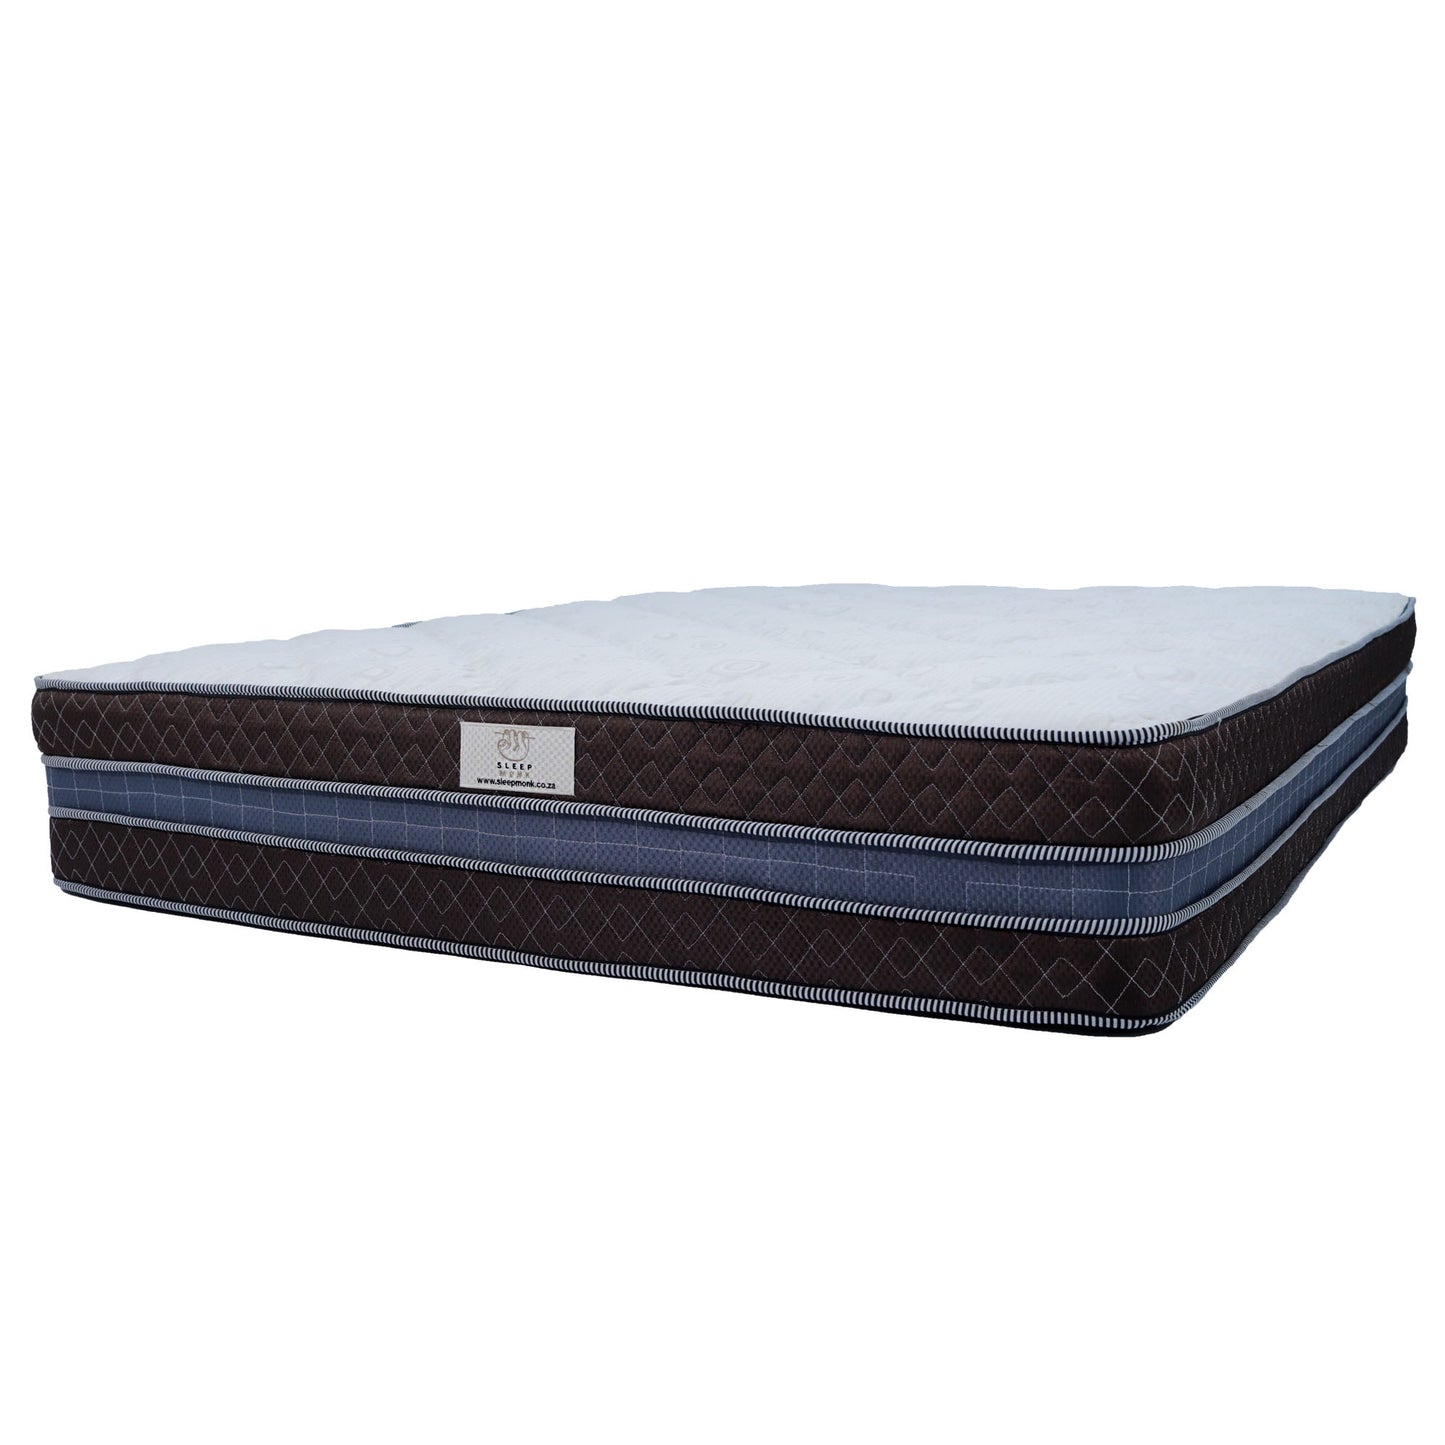 Premium EuroTop Classic King Mattress - Premium Bed from SLEEPMONK - Just R 5700! Shop now at SLEEPMONK